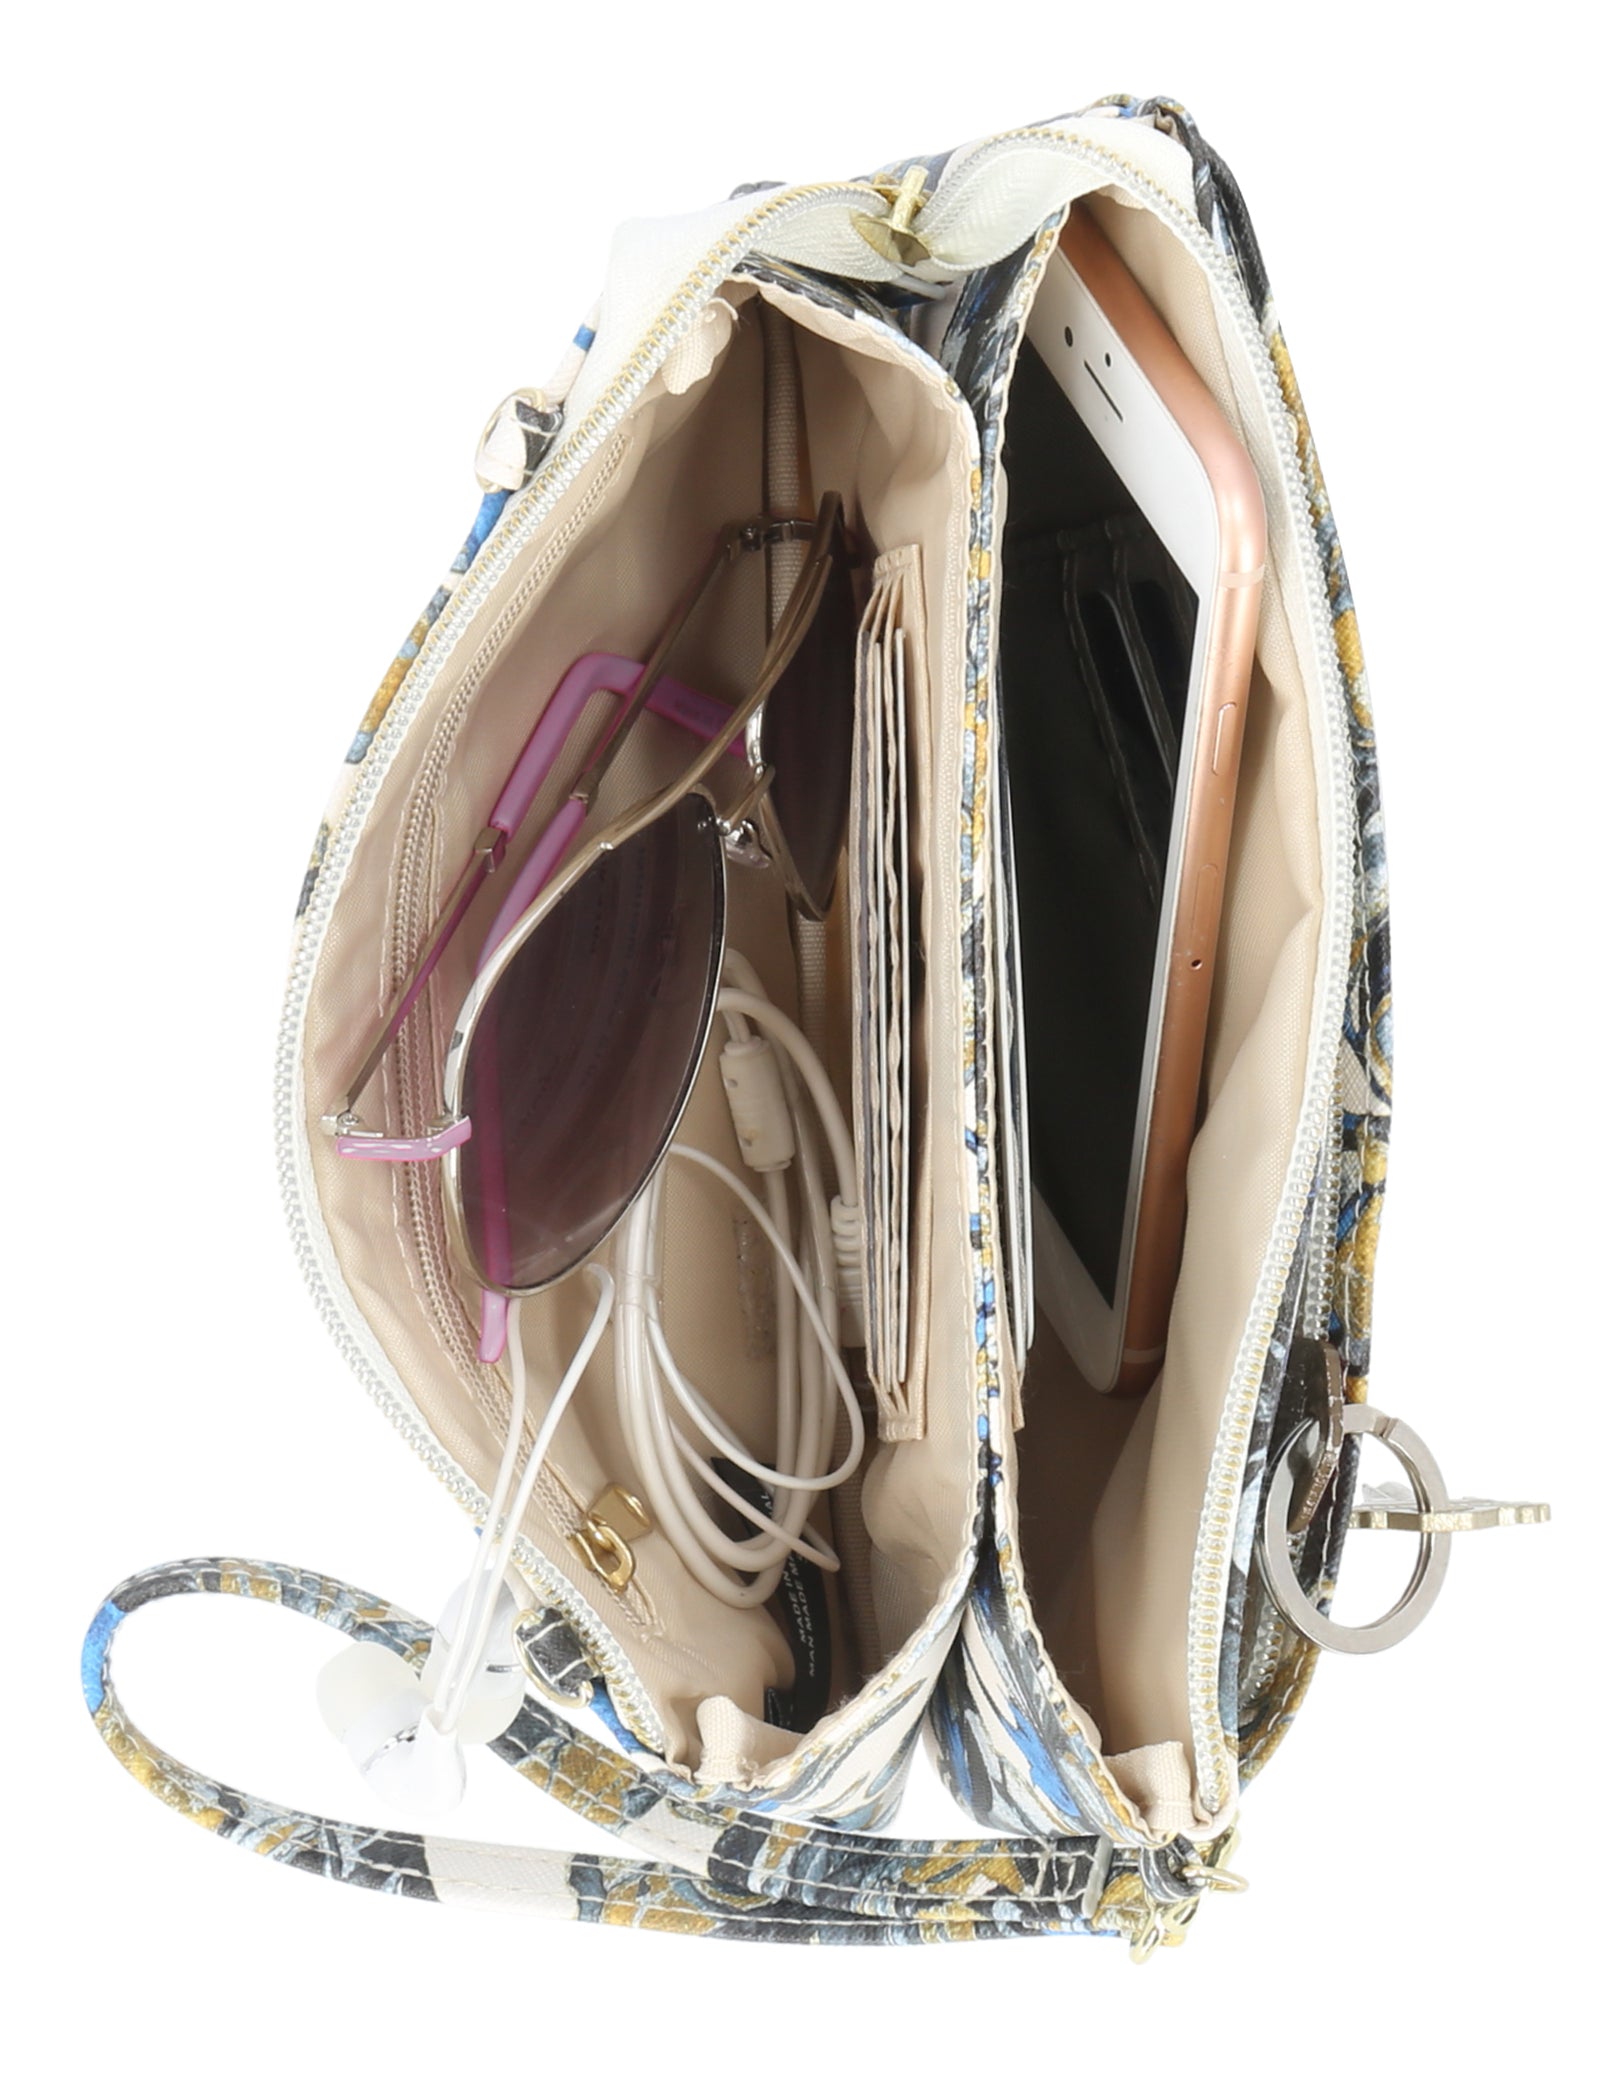 Little Miracle Leather Phone Bag - Mundi Wallets